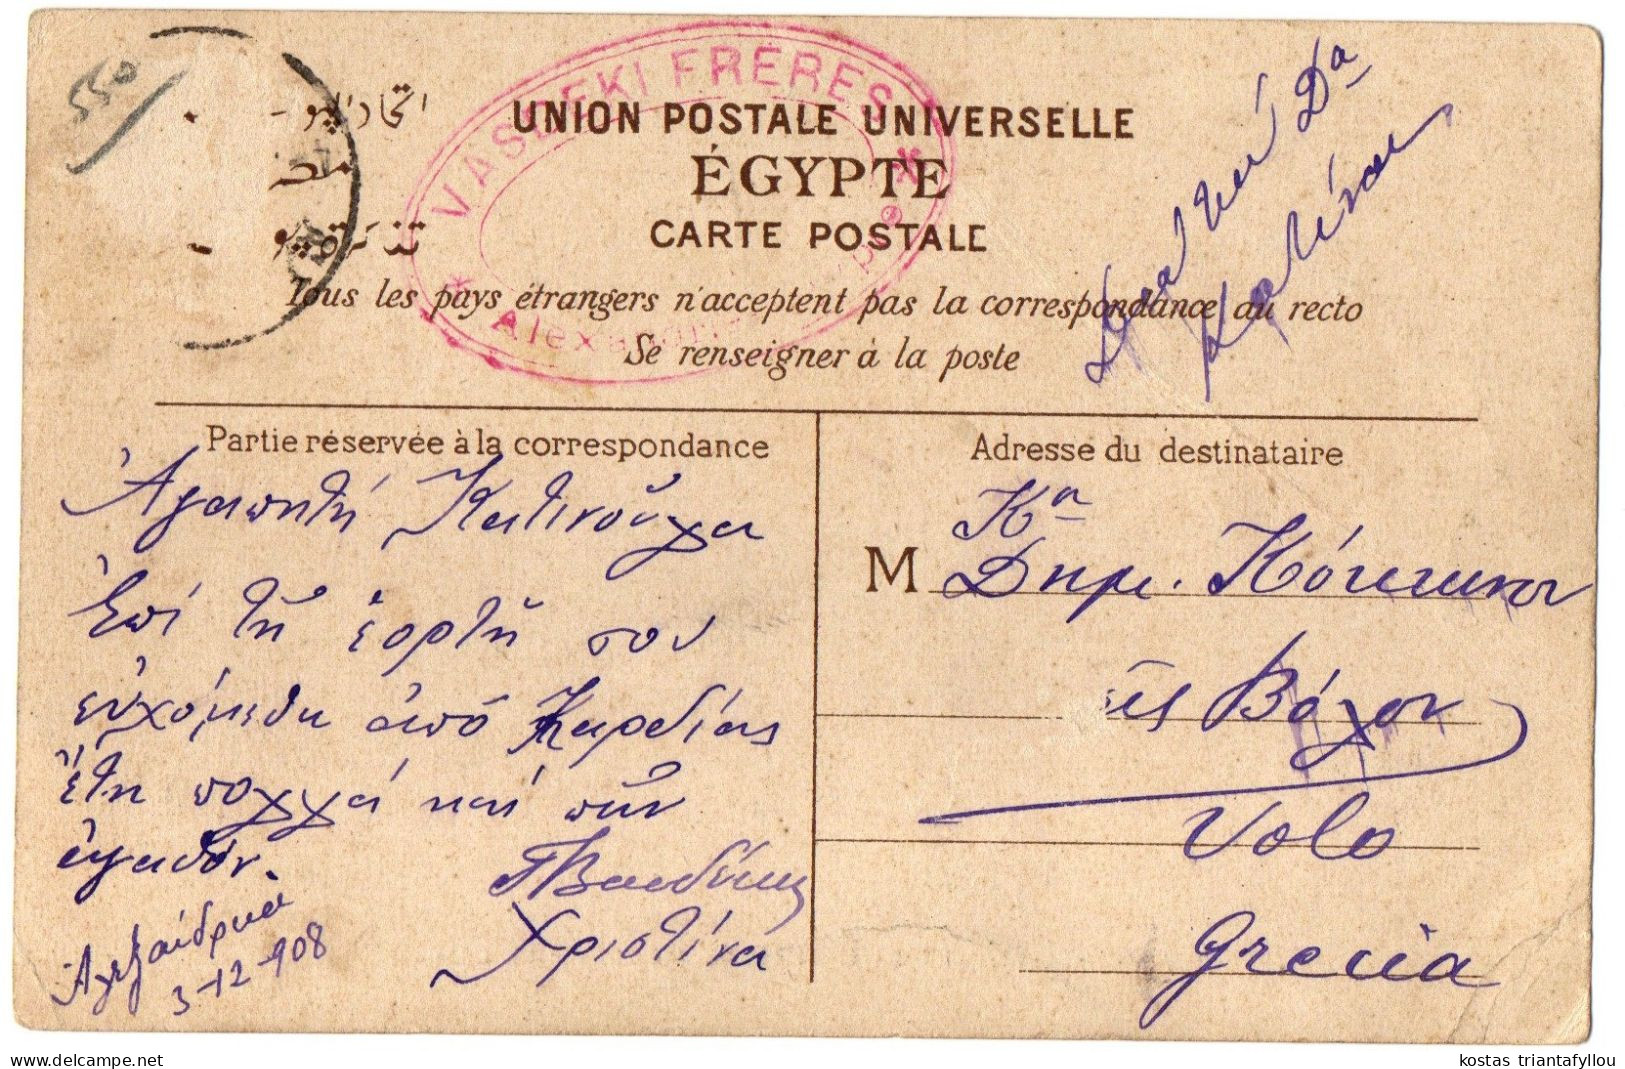 4.1.15 EGYPT, CAIRO, PLACE ATABA EL KHADRA, 1908, POSTCARD - Cairo